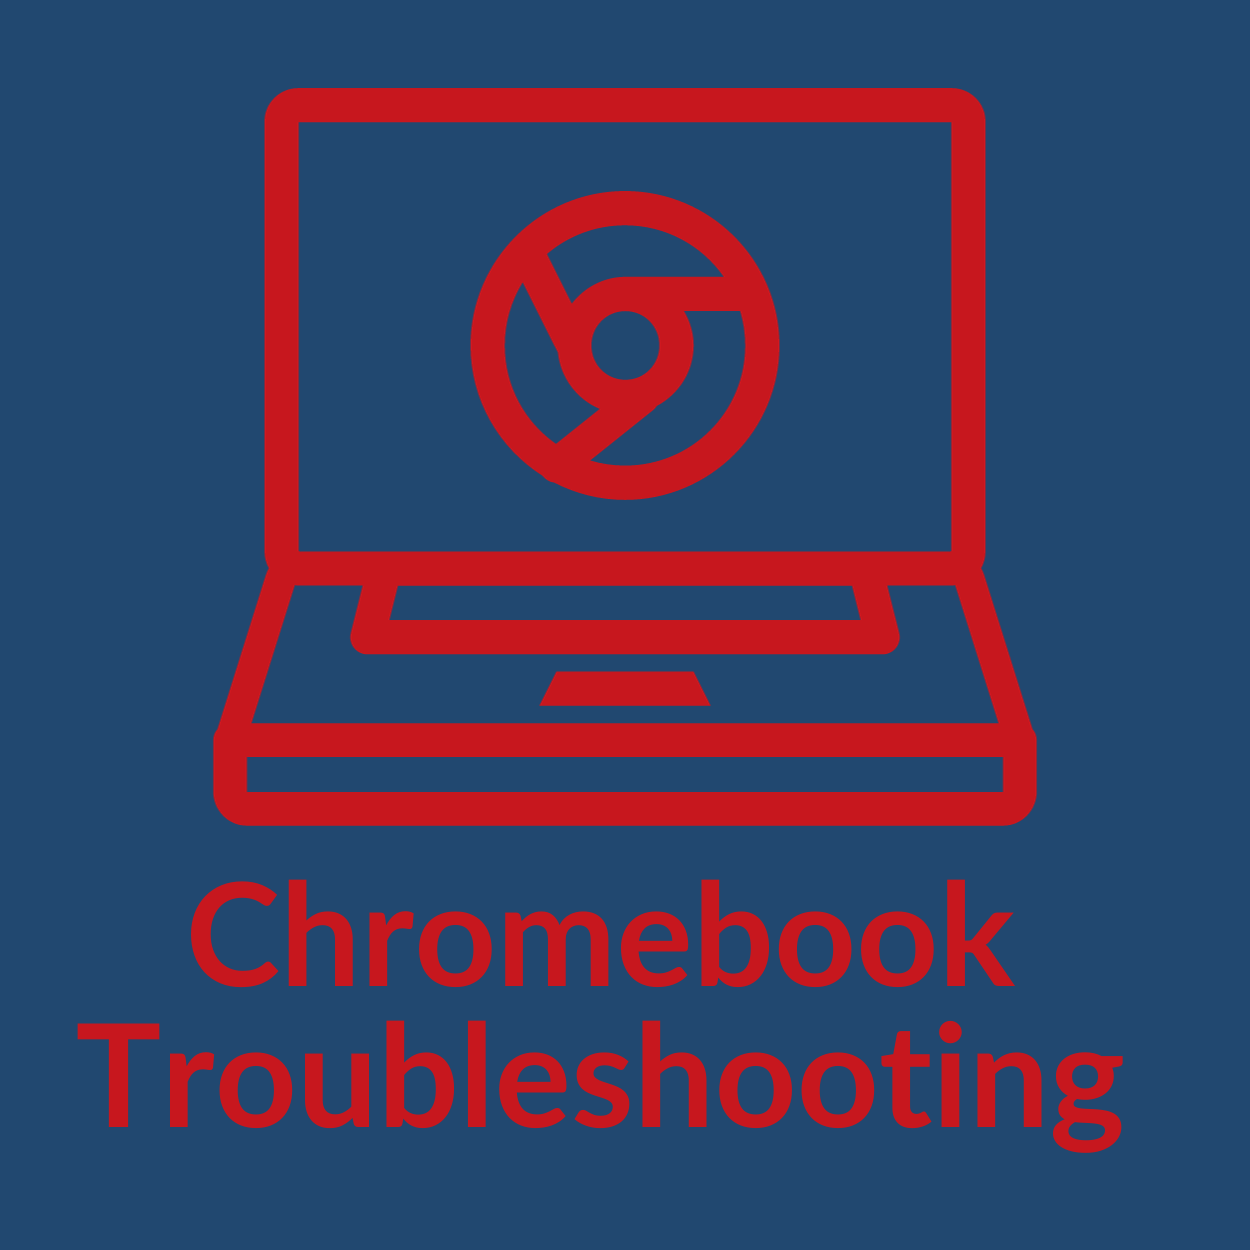 Chromebook troubleshooting